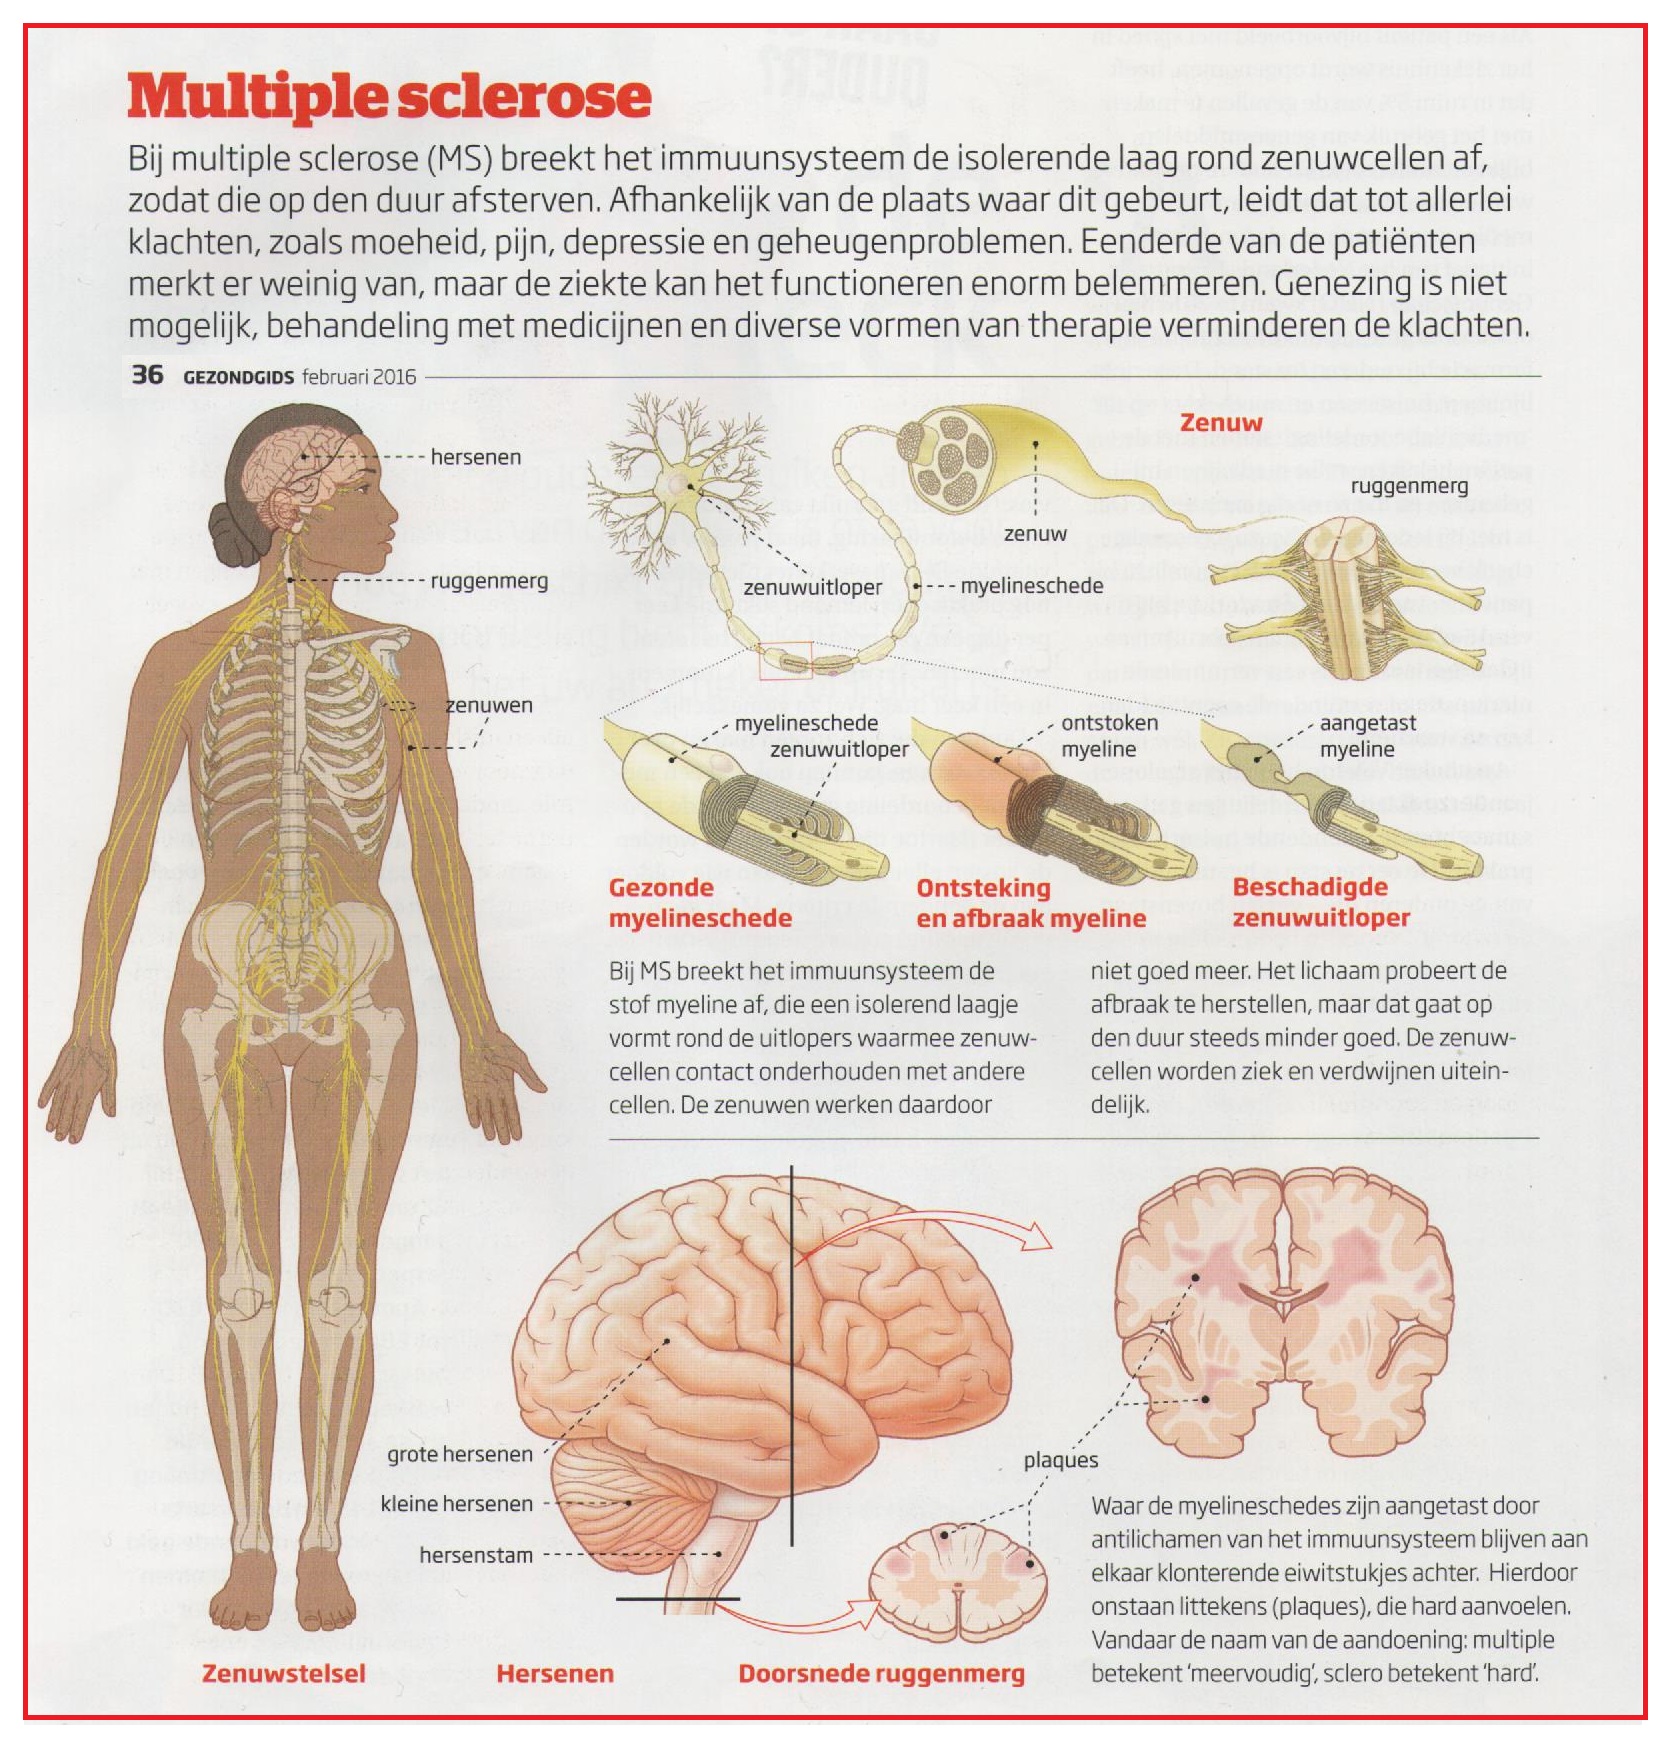 Multiplesclerose2